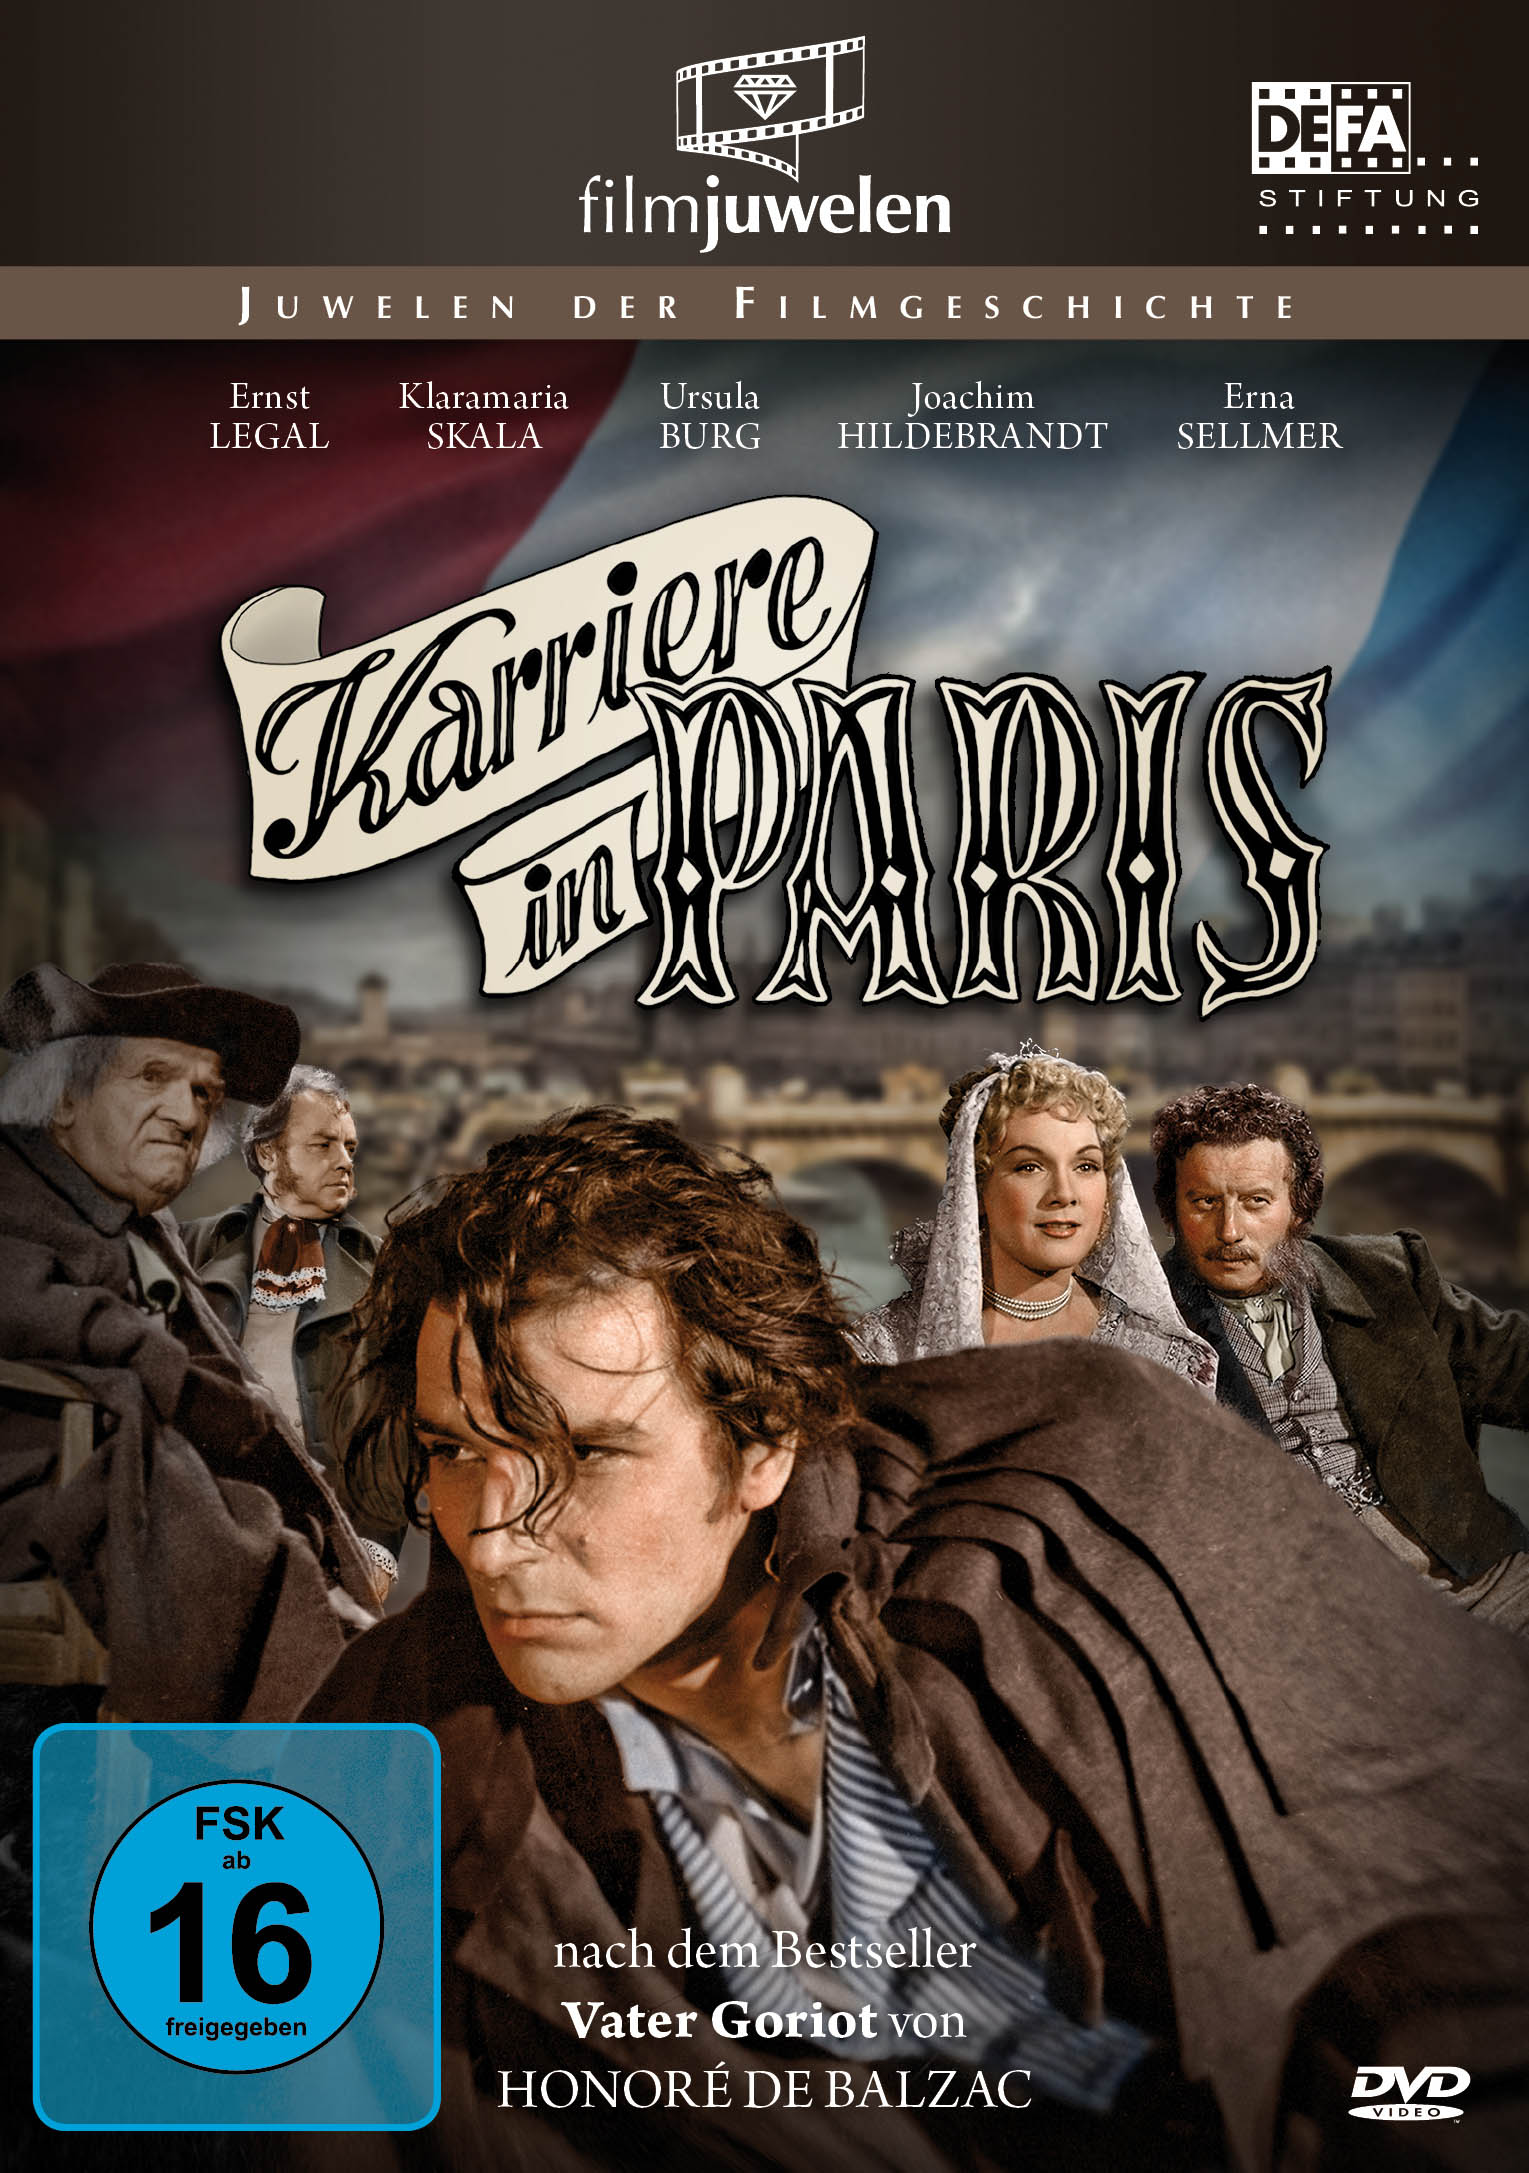 Honoré de Balzac: DVD in Karriere Paris